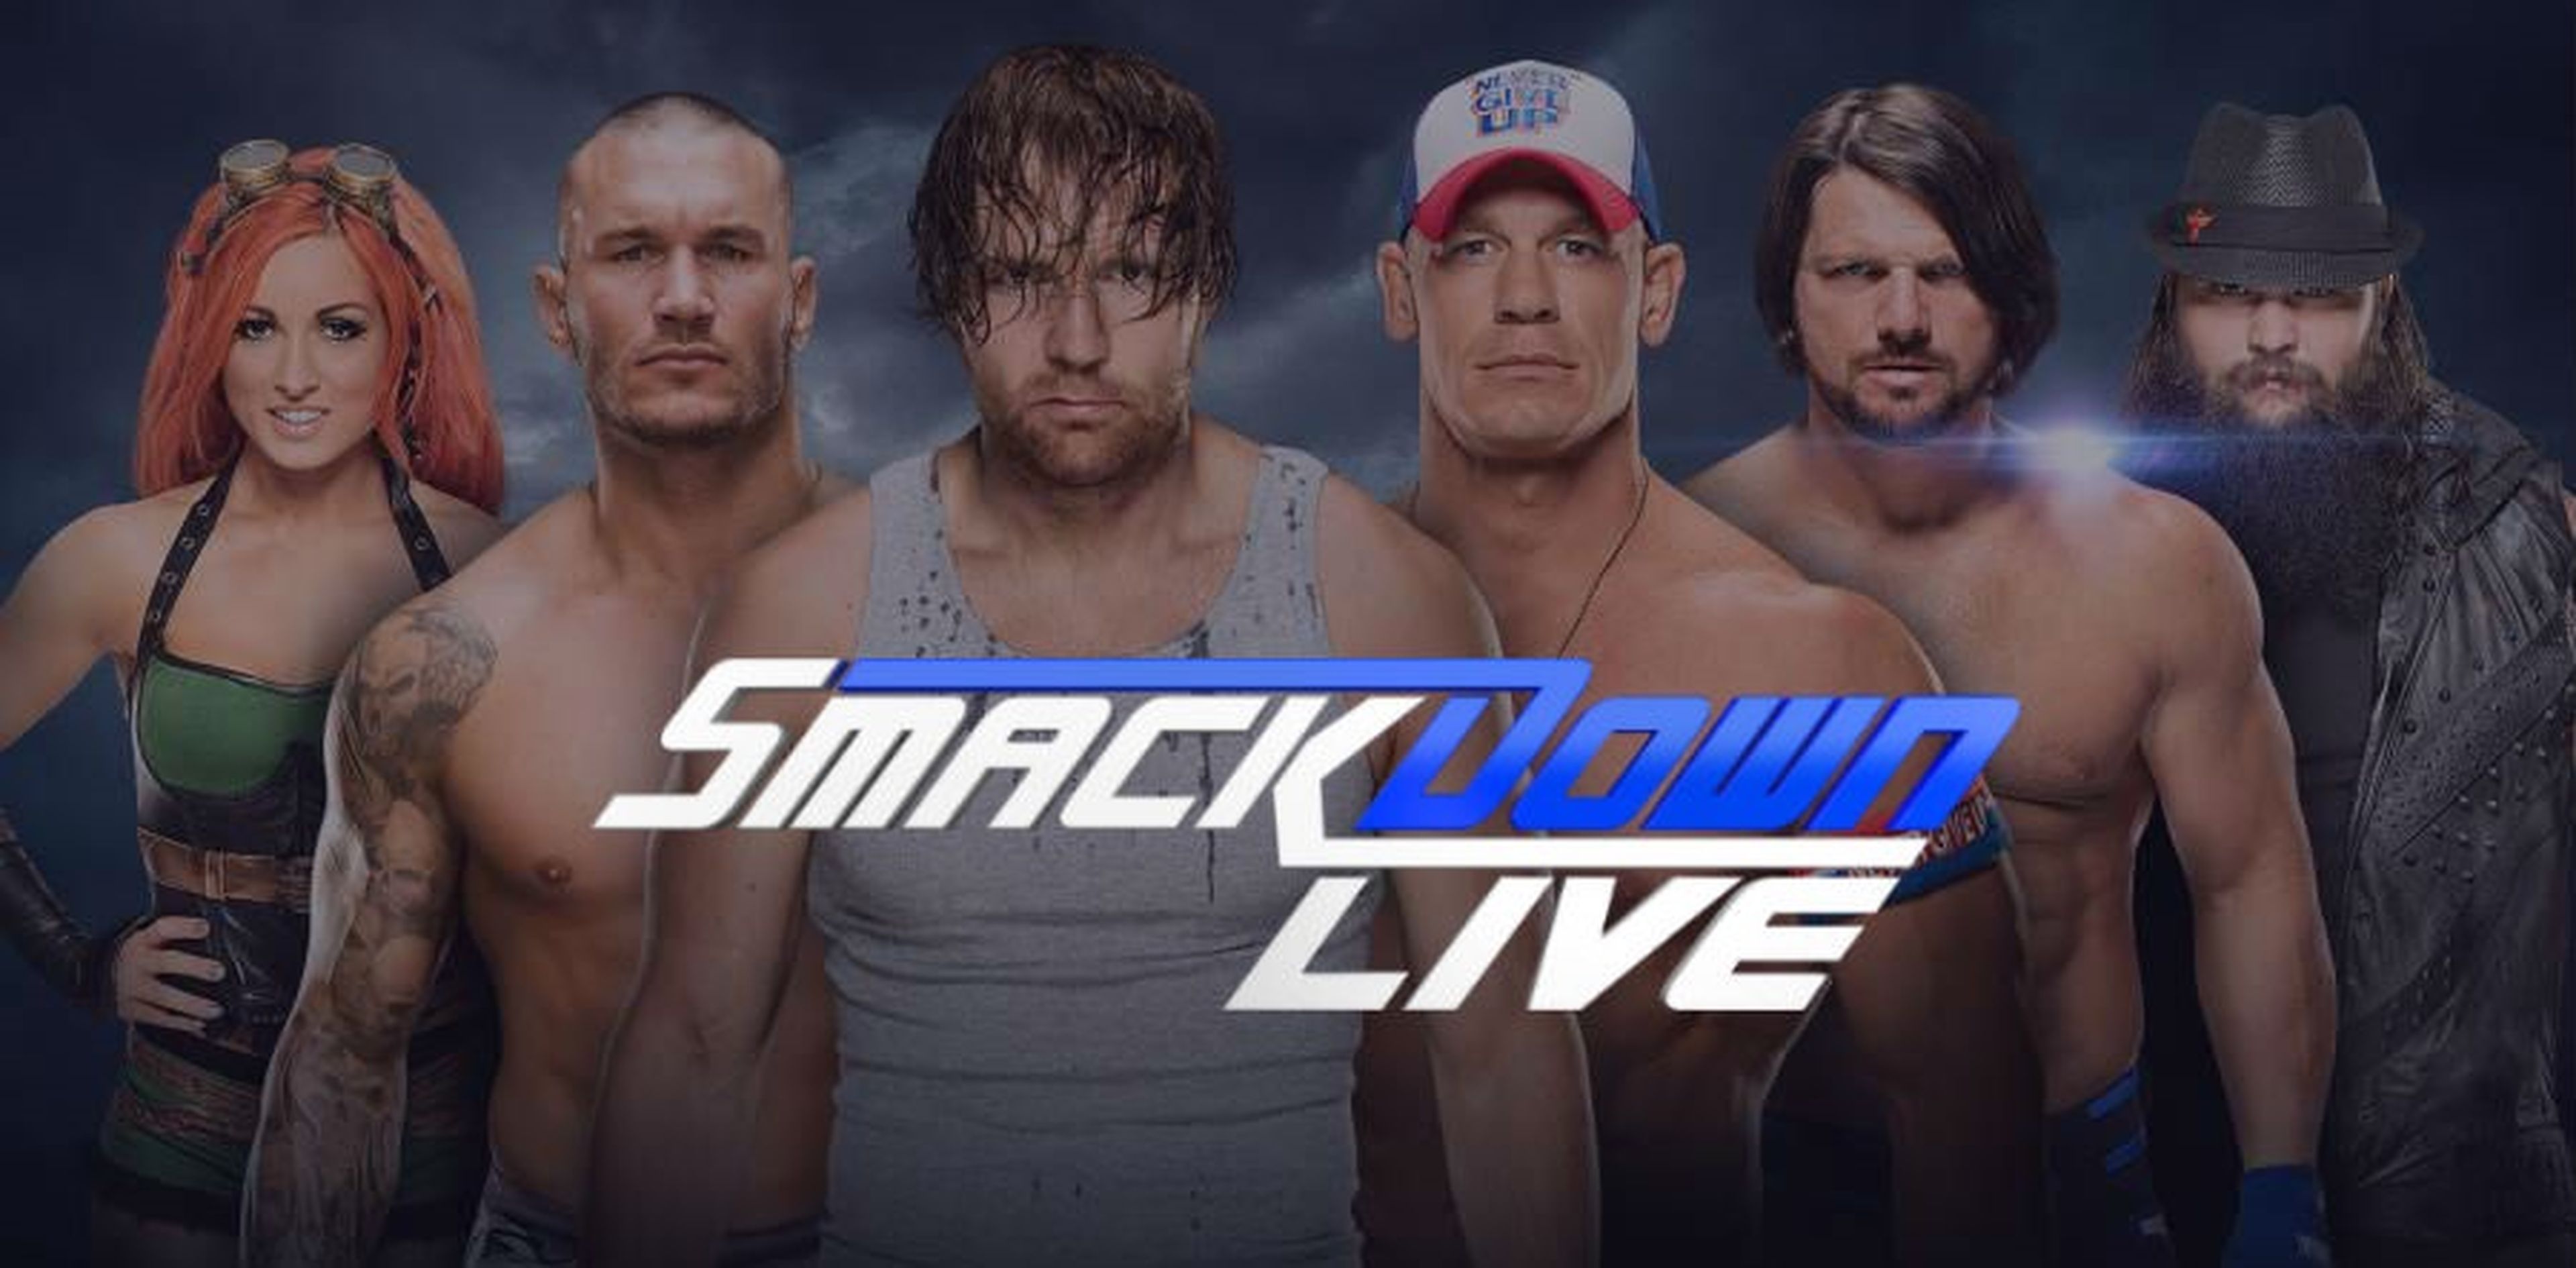 WWE - SmackDown Live